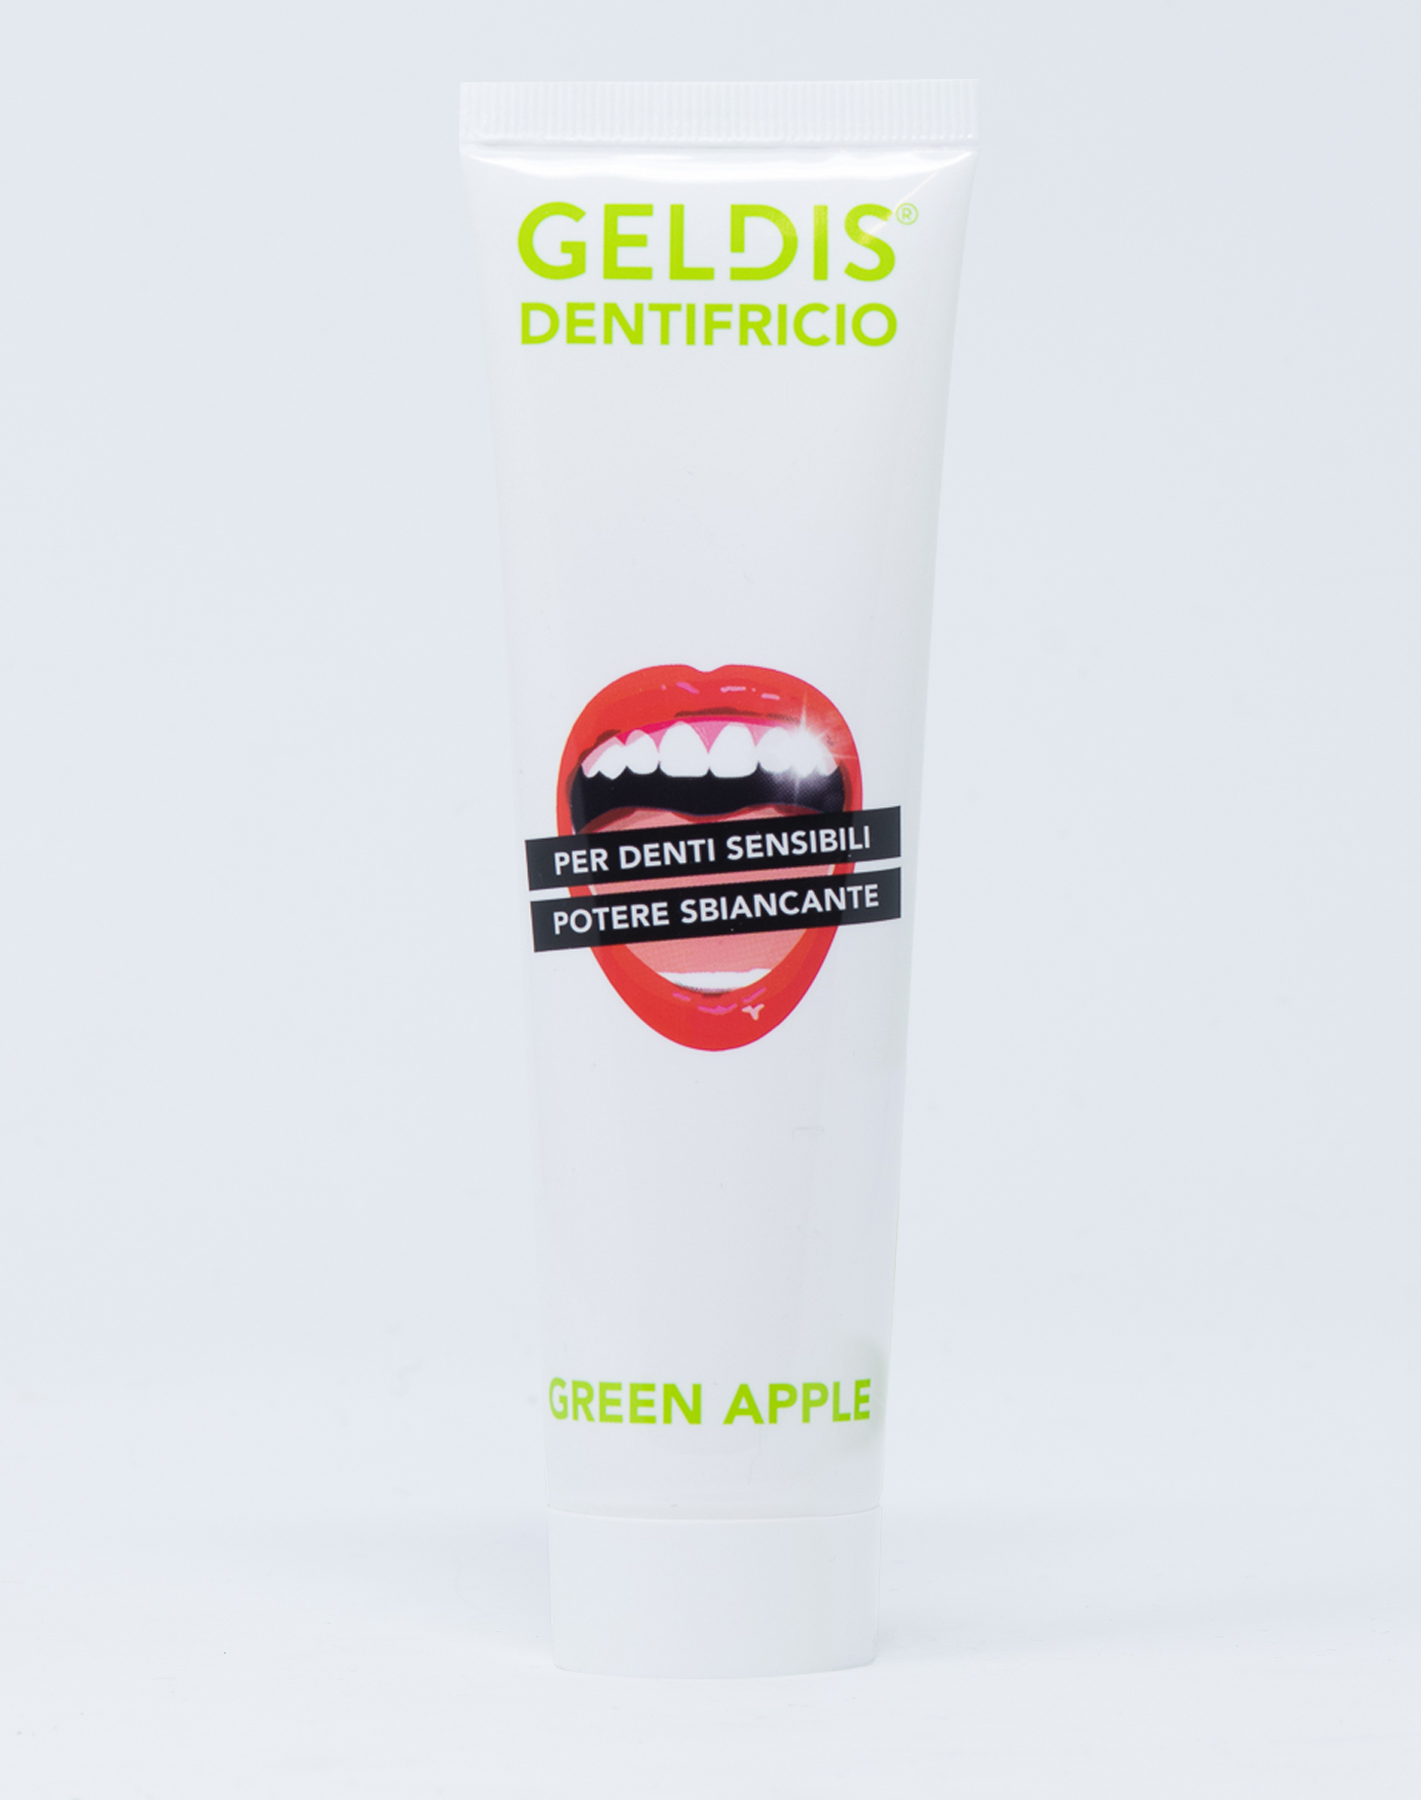 Geldis Dentifricio Sbiancante per Denti Sensibili alla Mela Verde - 100 ml